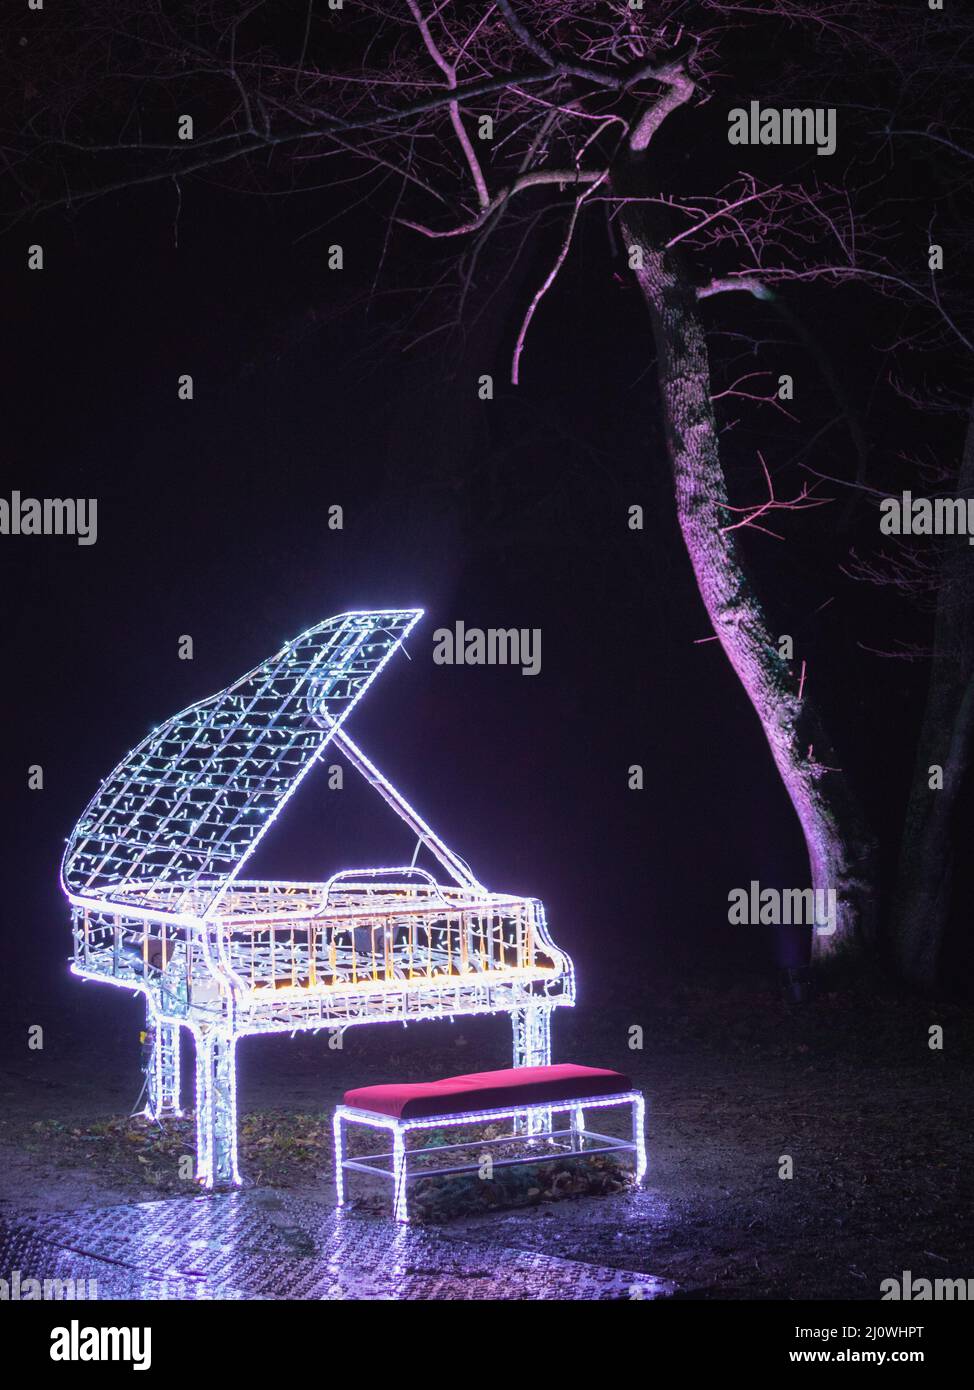 Christmas lights on a piano keyboard Stock Photo